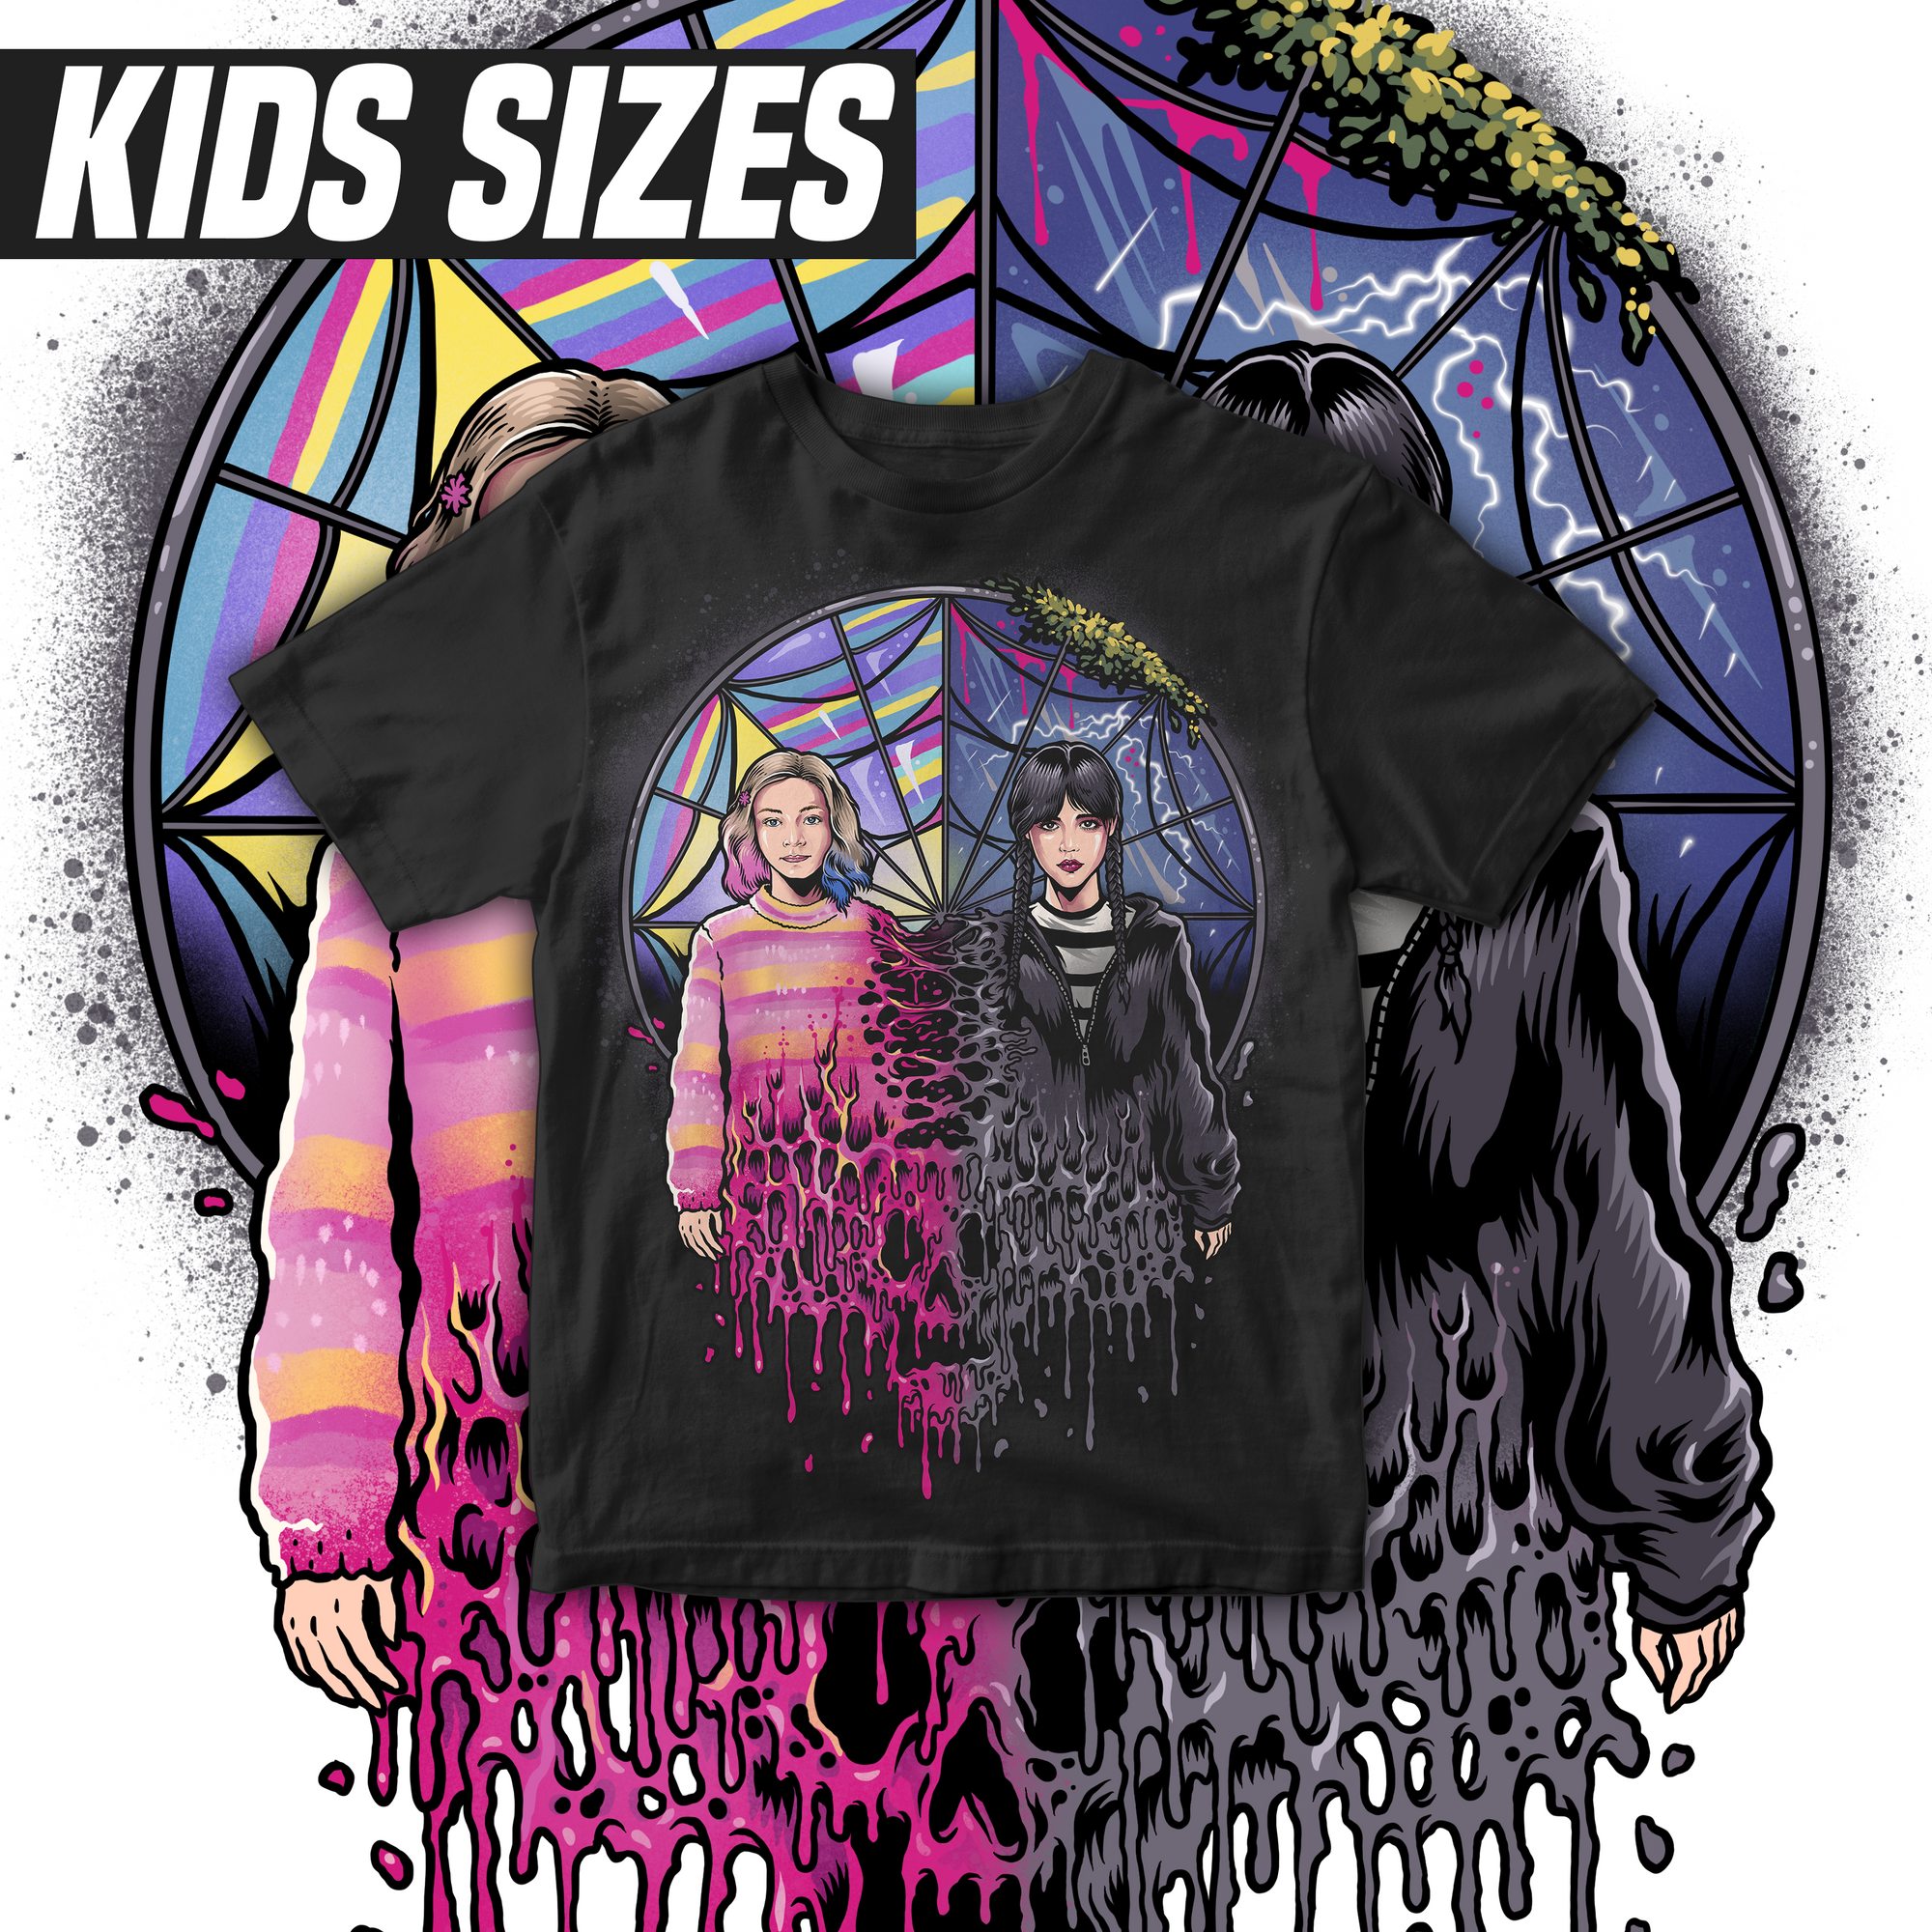 Wednesday Kids T-Shirt